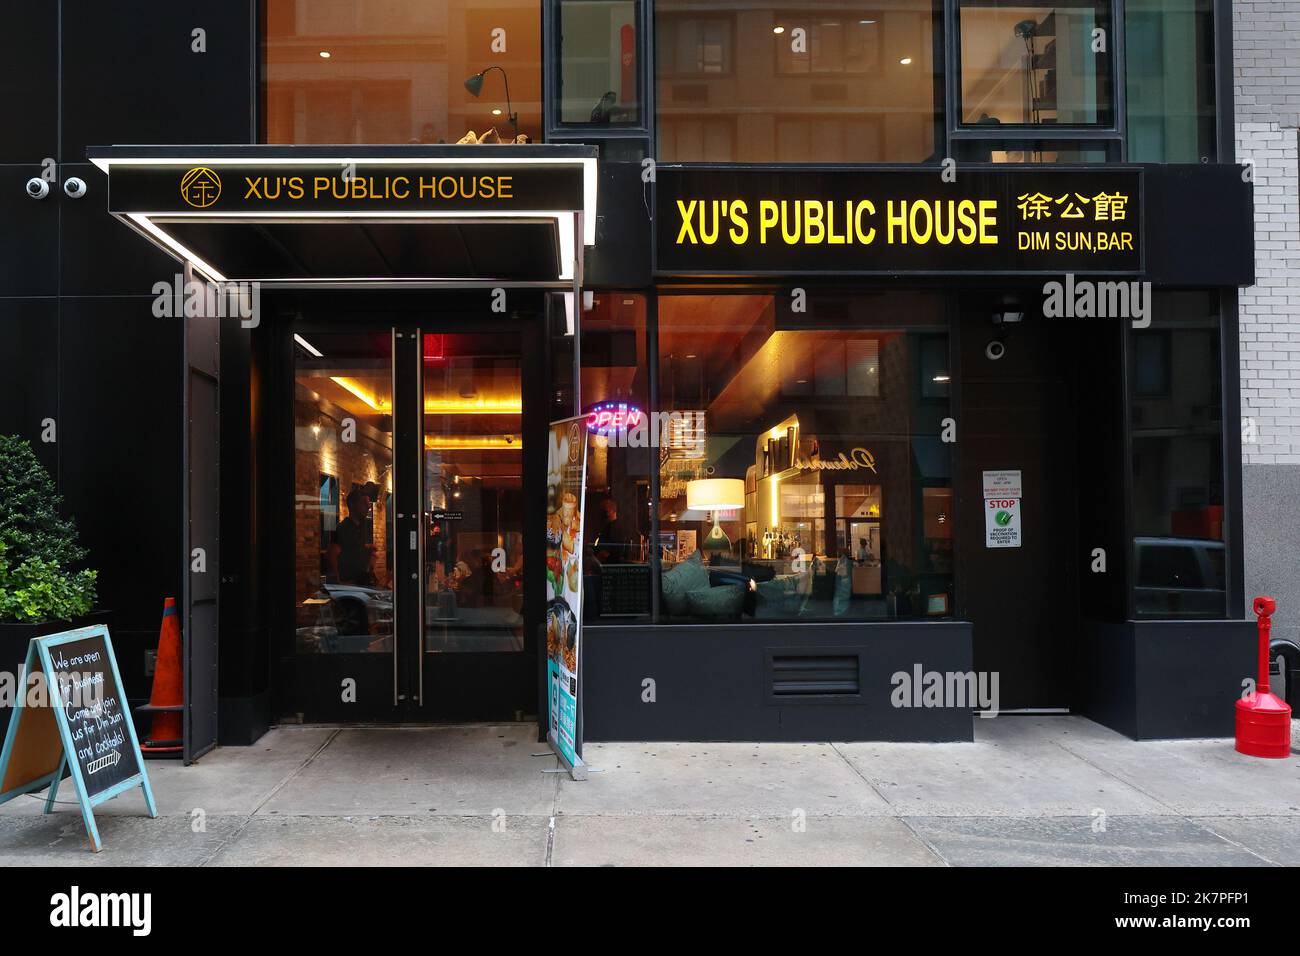 Xu's Public House, 15 Union Square W, Nueva York, Nueva York, Nueva York, foto de un restaurante chino cantonés dim sum y bar de cócteles en Manhattan Foto de stock